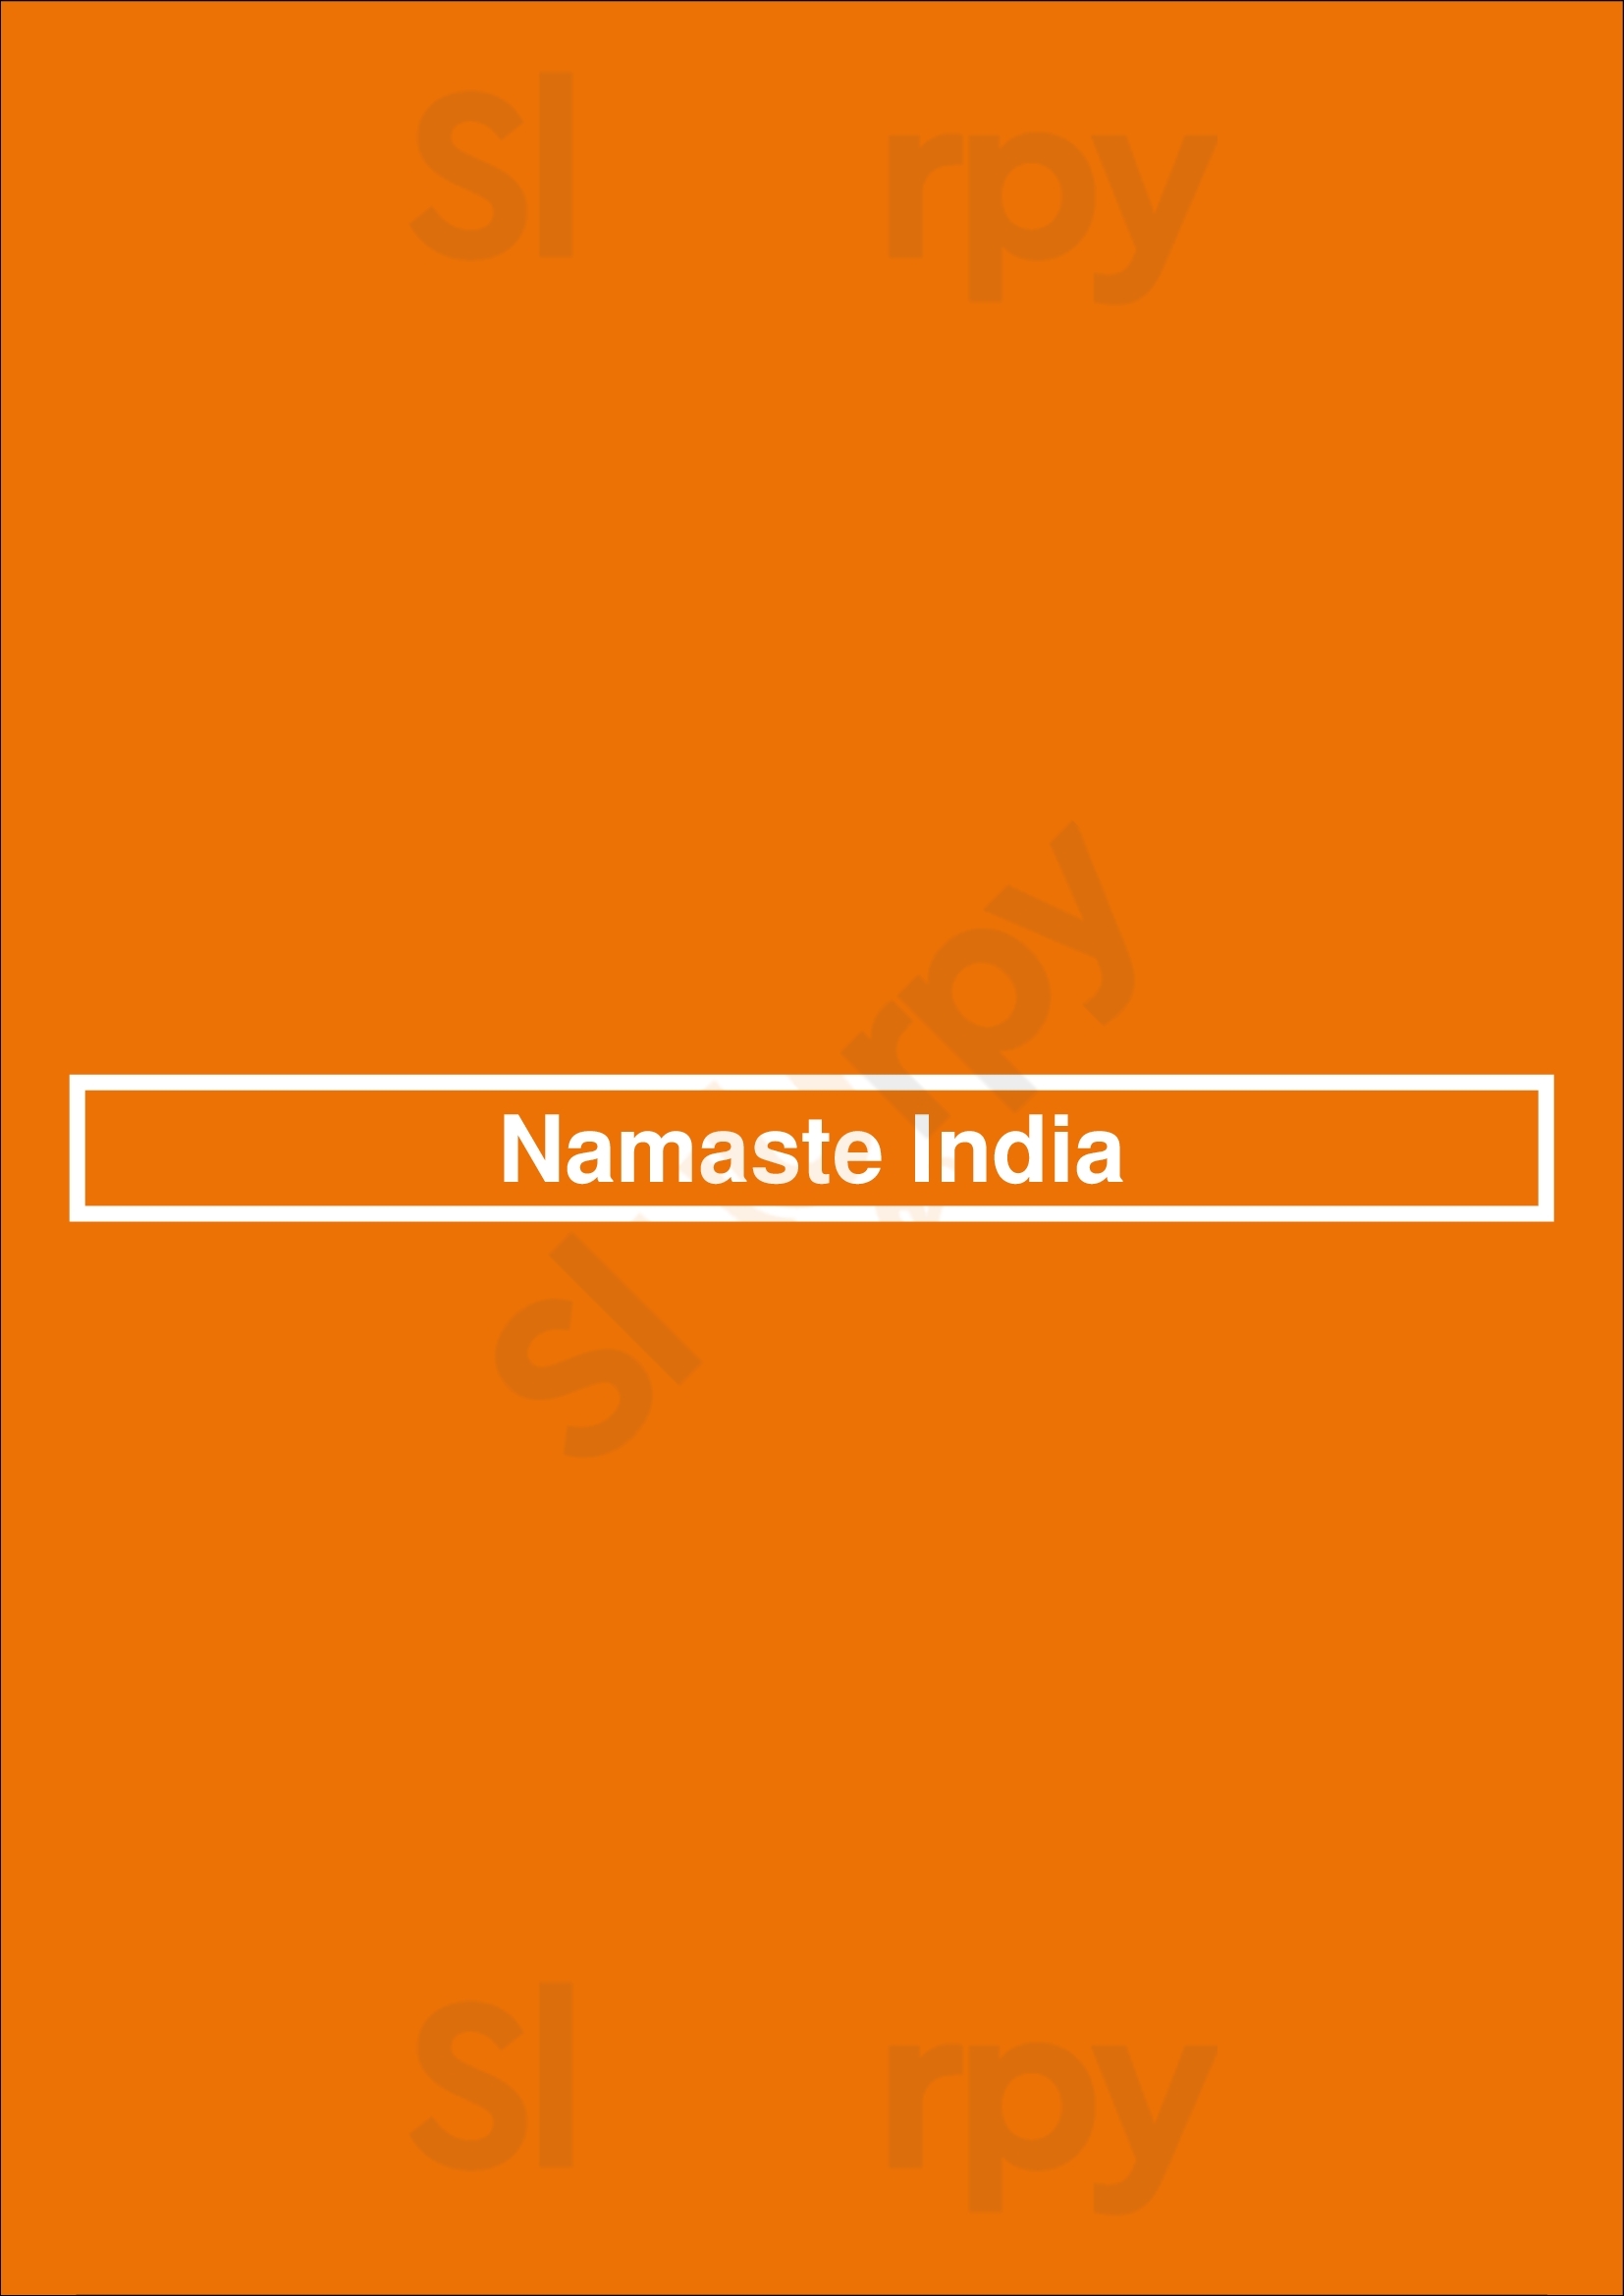 Namaste India Amsterdam Menu - 1